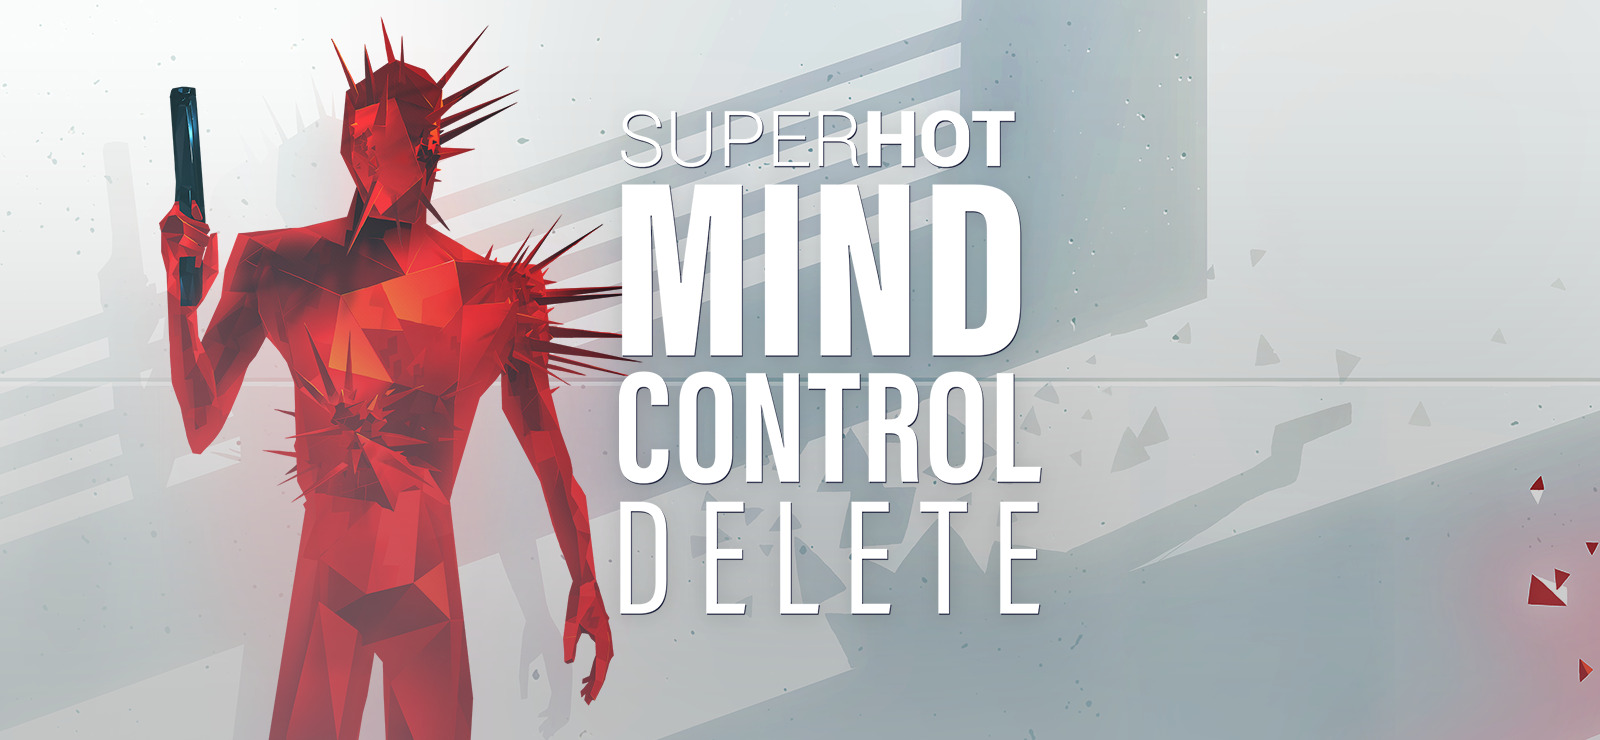 download superhot mind control delete